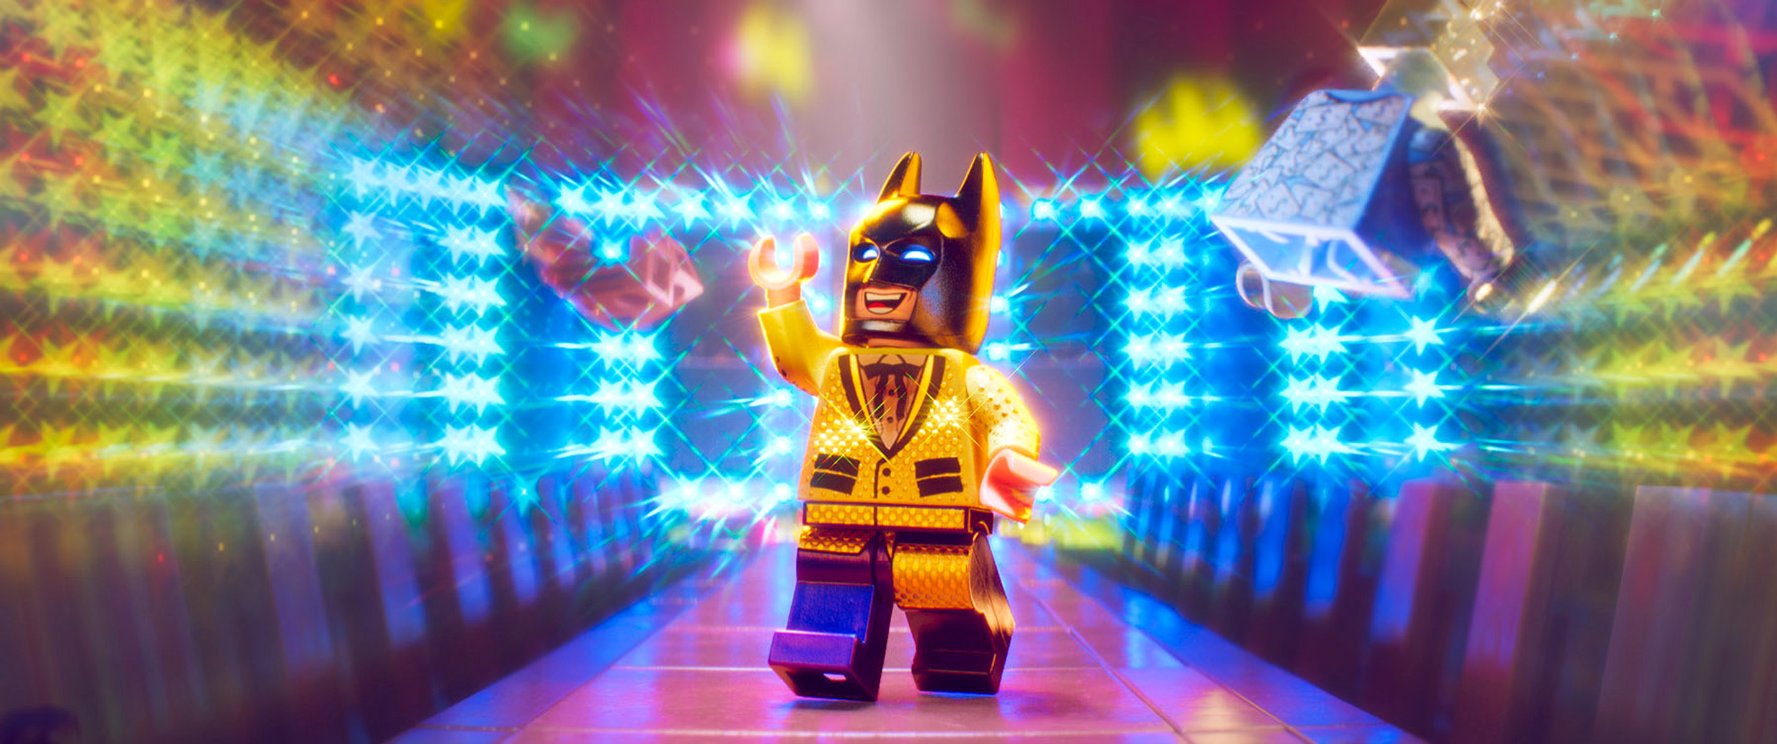 «Лего. Фильм: Бэтмен» снова стал лидером проката в США